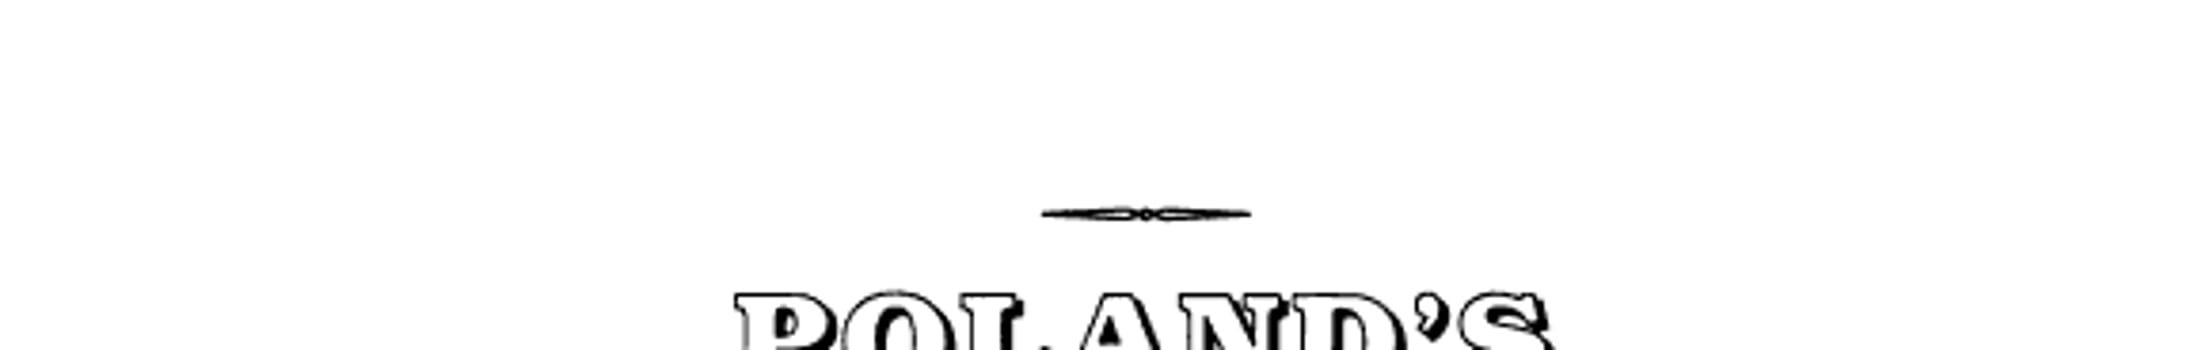 polands-jewish-landmarks-47887-1